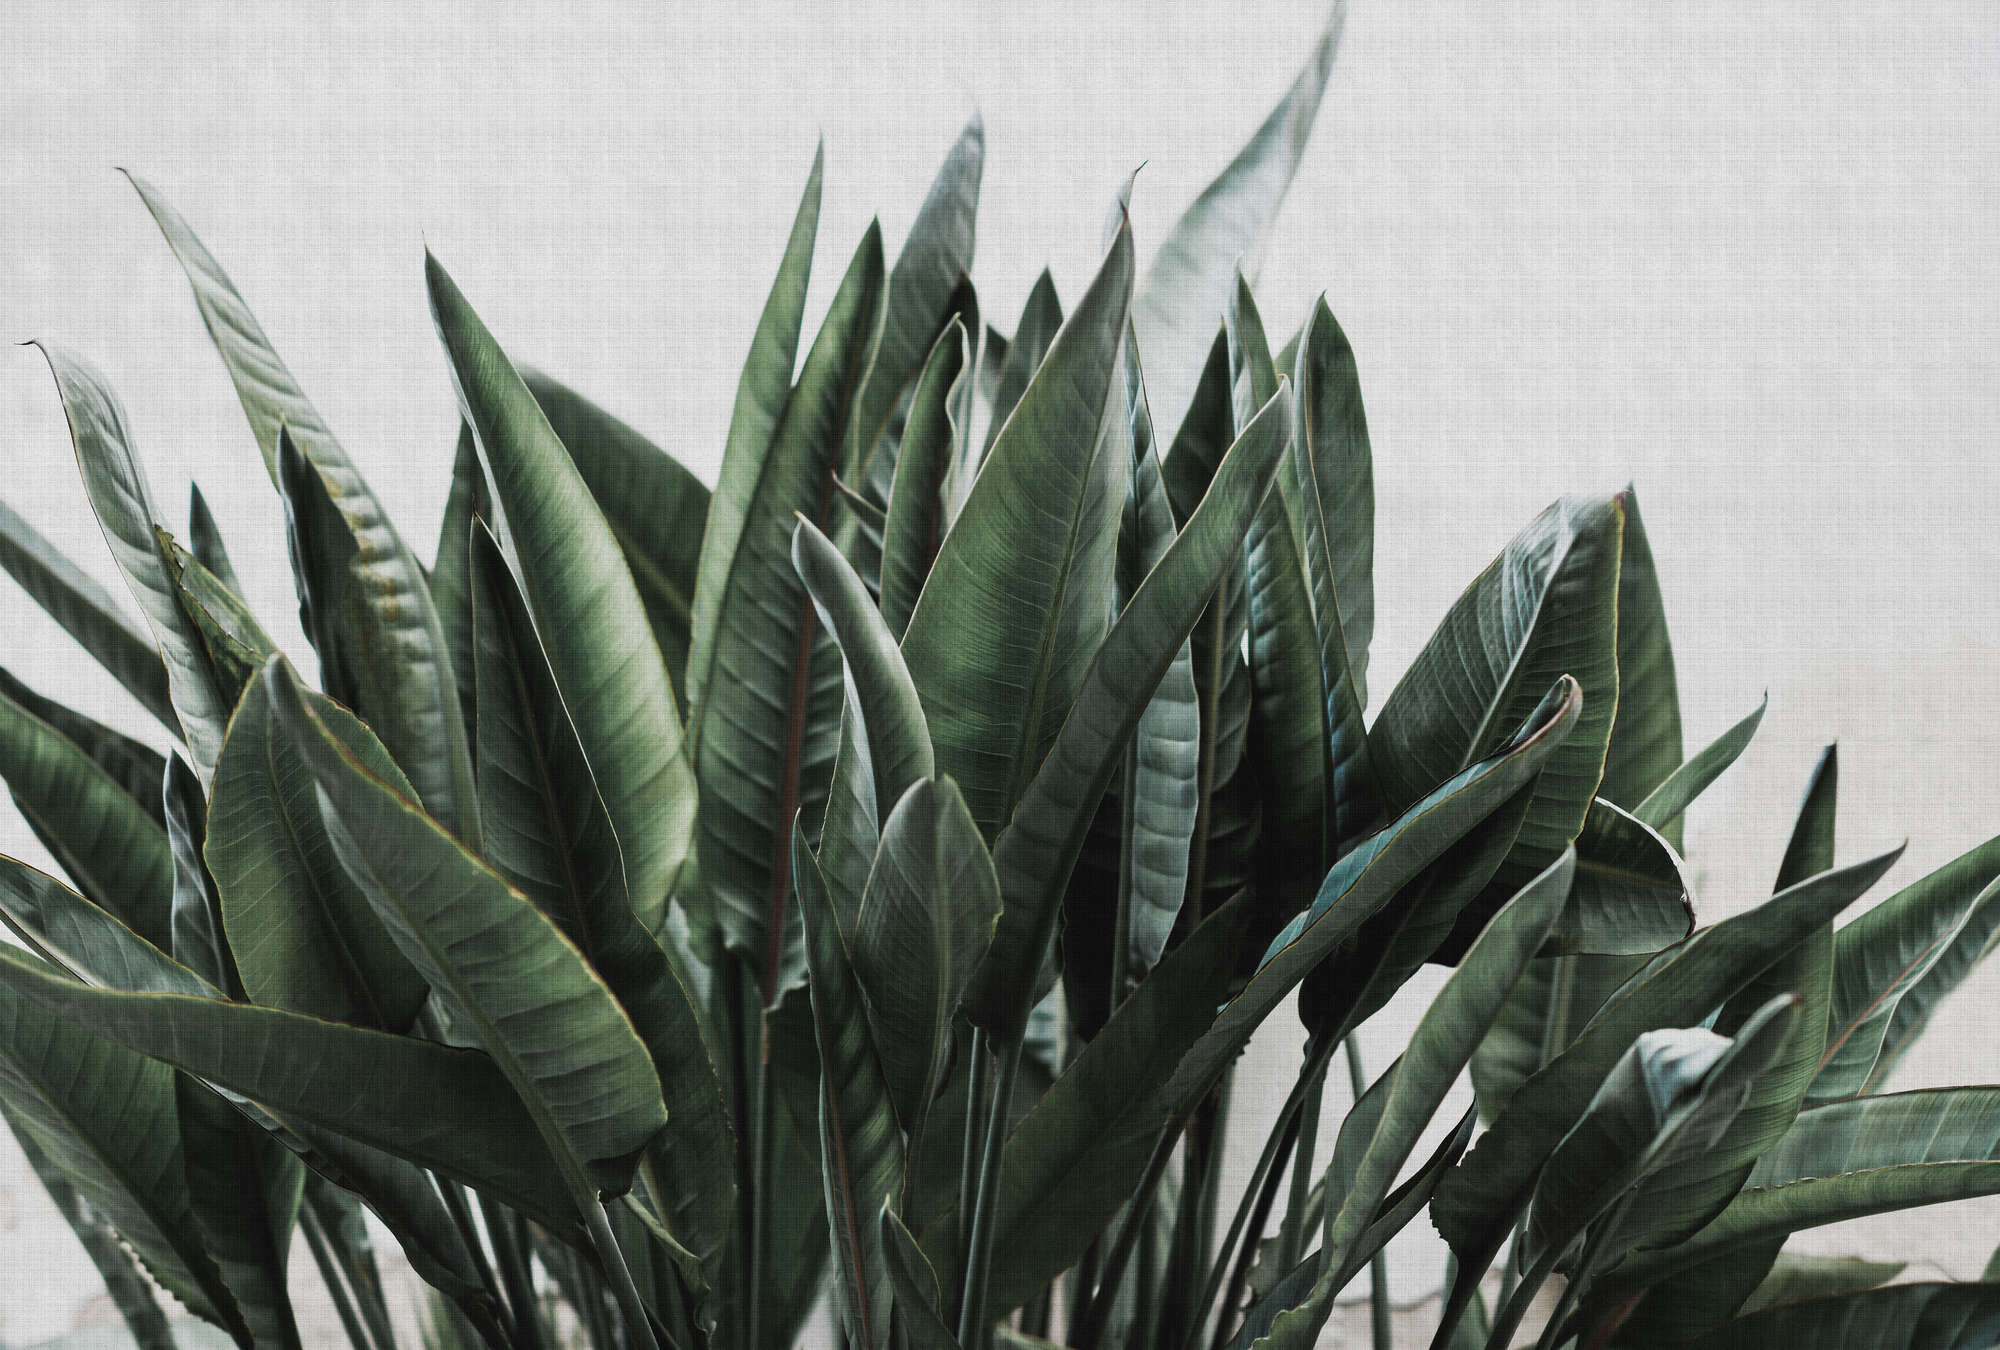             Urban jungle 2 - mural de hojas de palmera, estructura de lino natural plantas exóticas - Gris, Verde | Vellón liso Premium
        